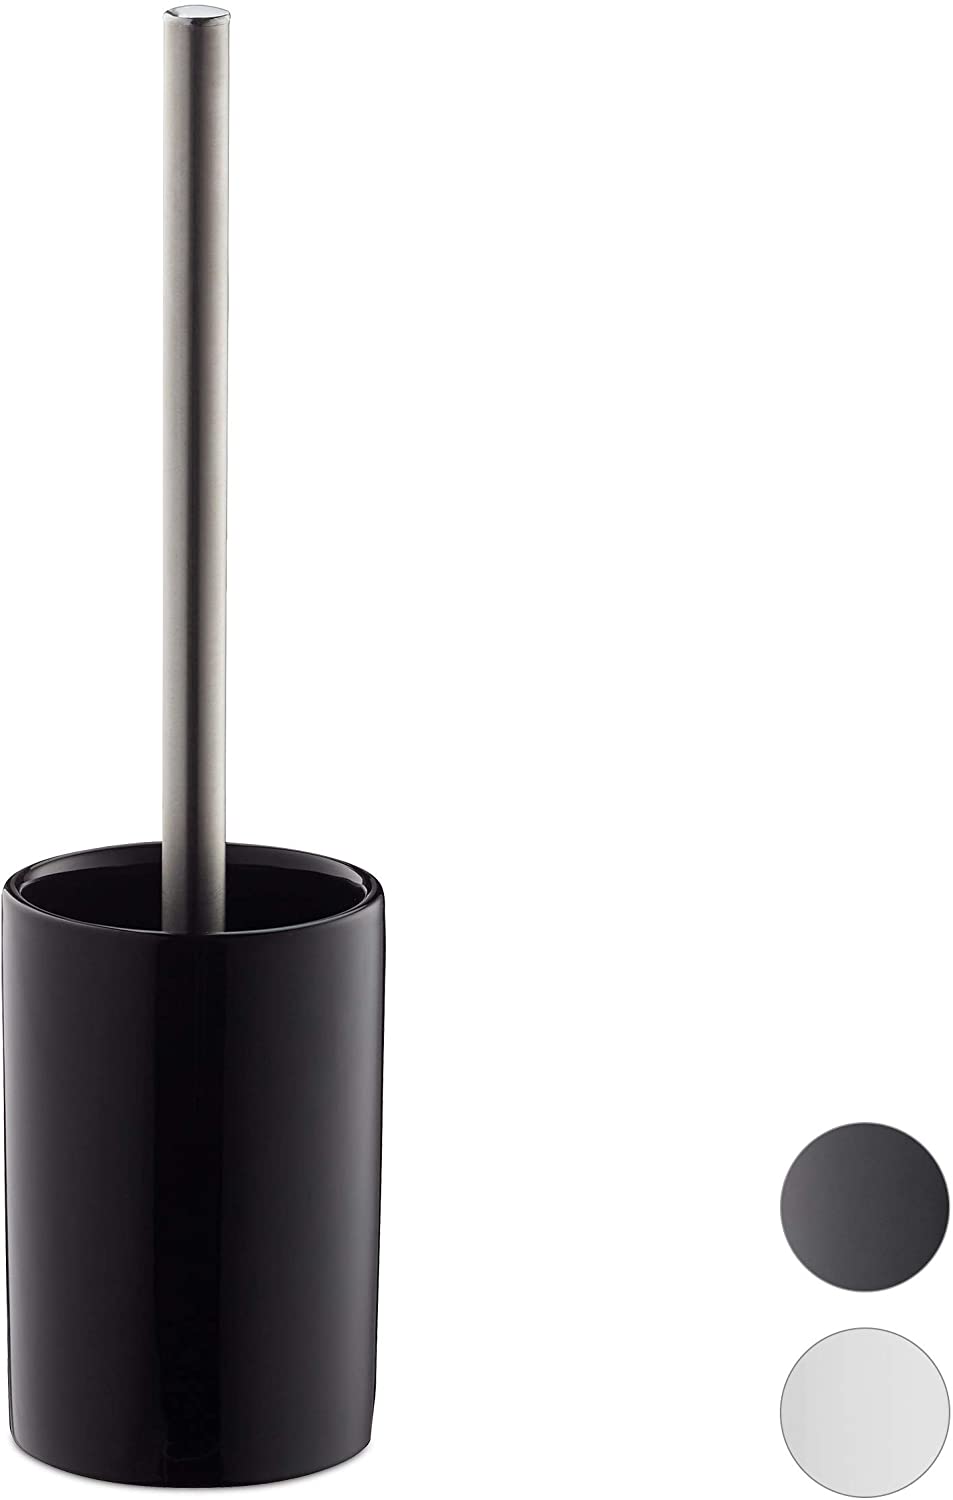 Relaxdays 1 x ceramic toilet brush holder with toilet brush, replaceable brush head, round, free-standing, 36 cm, black.